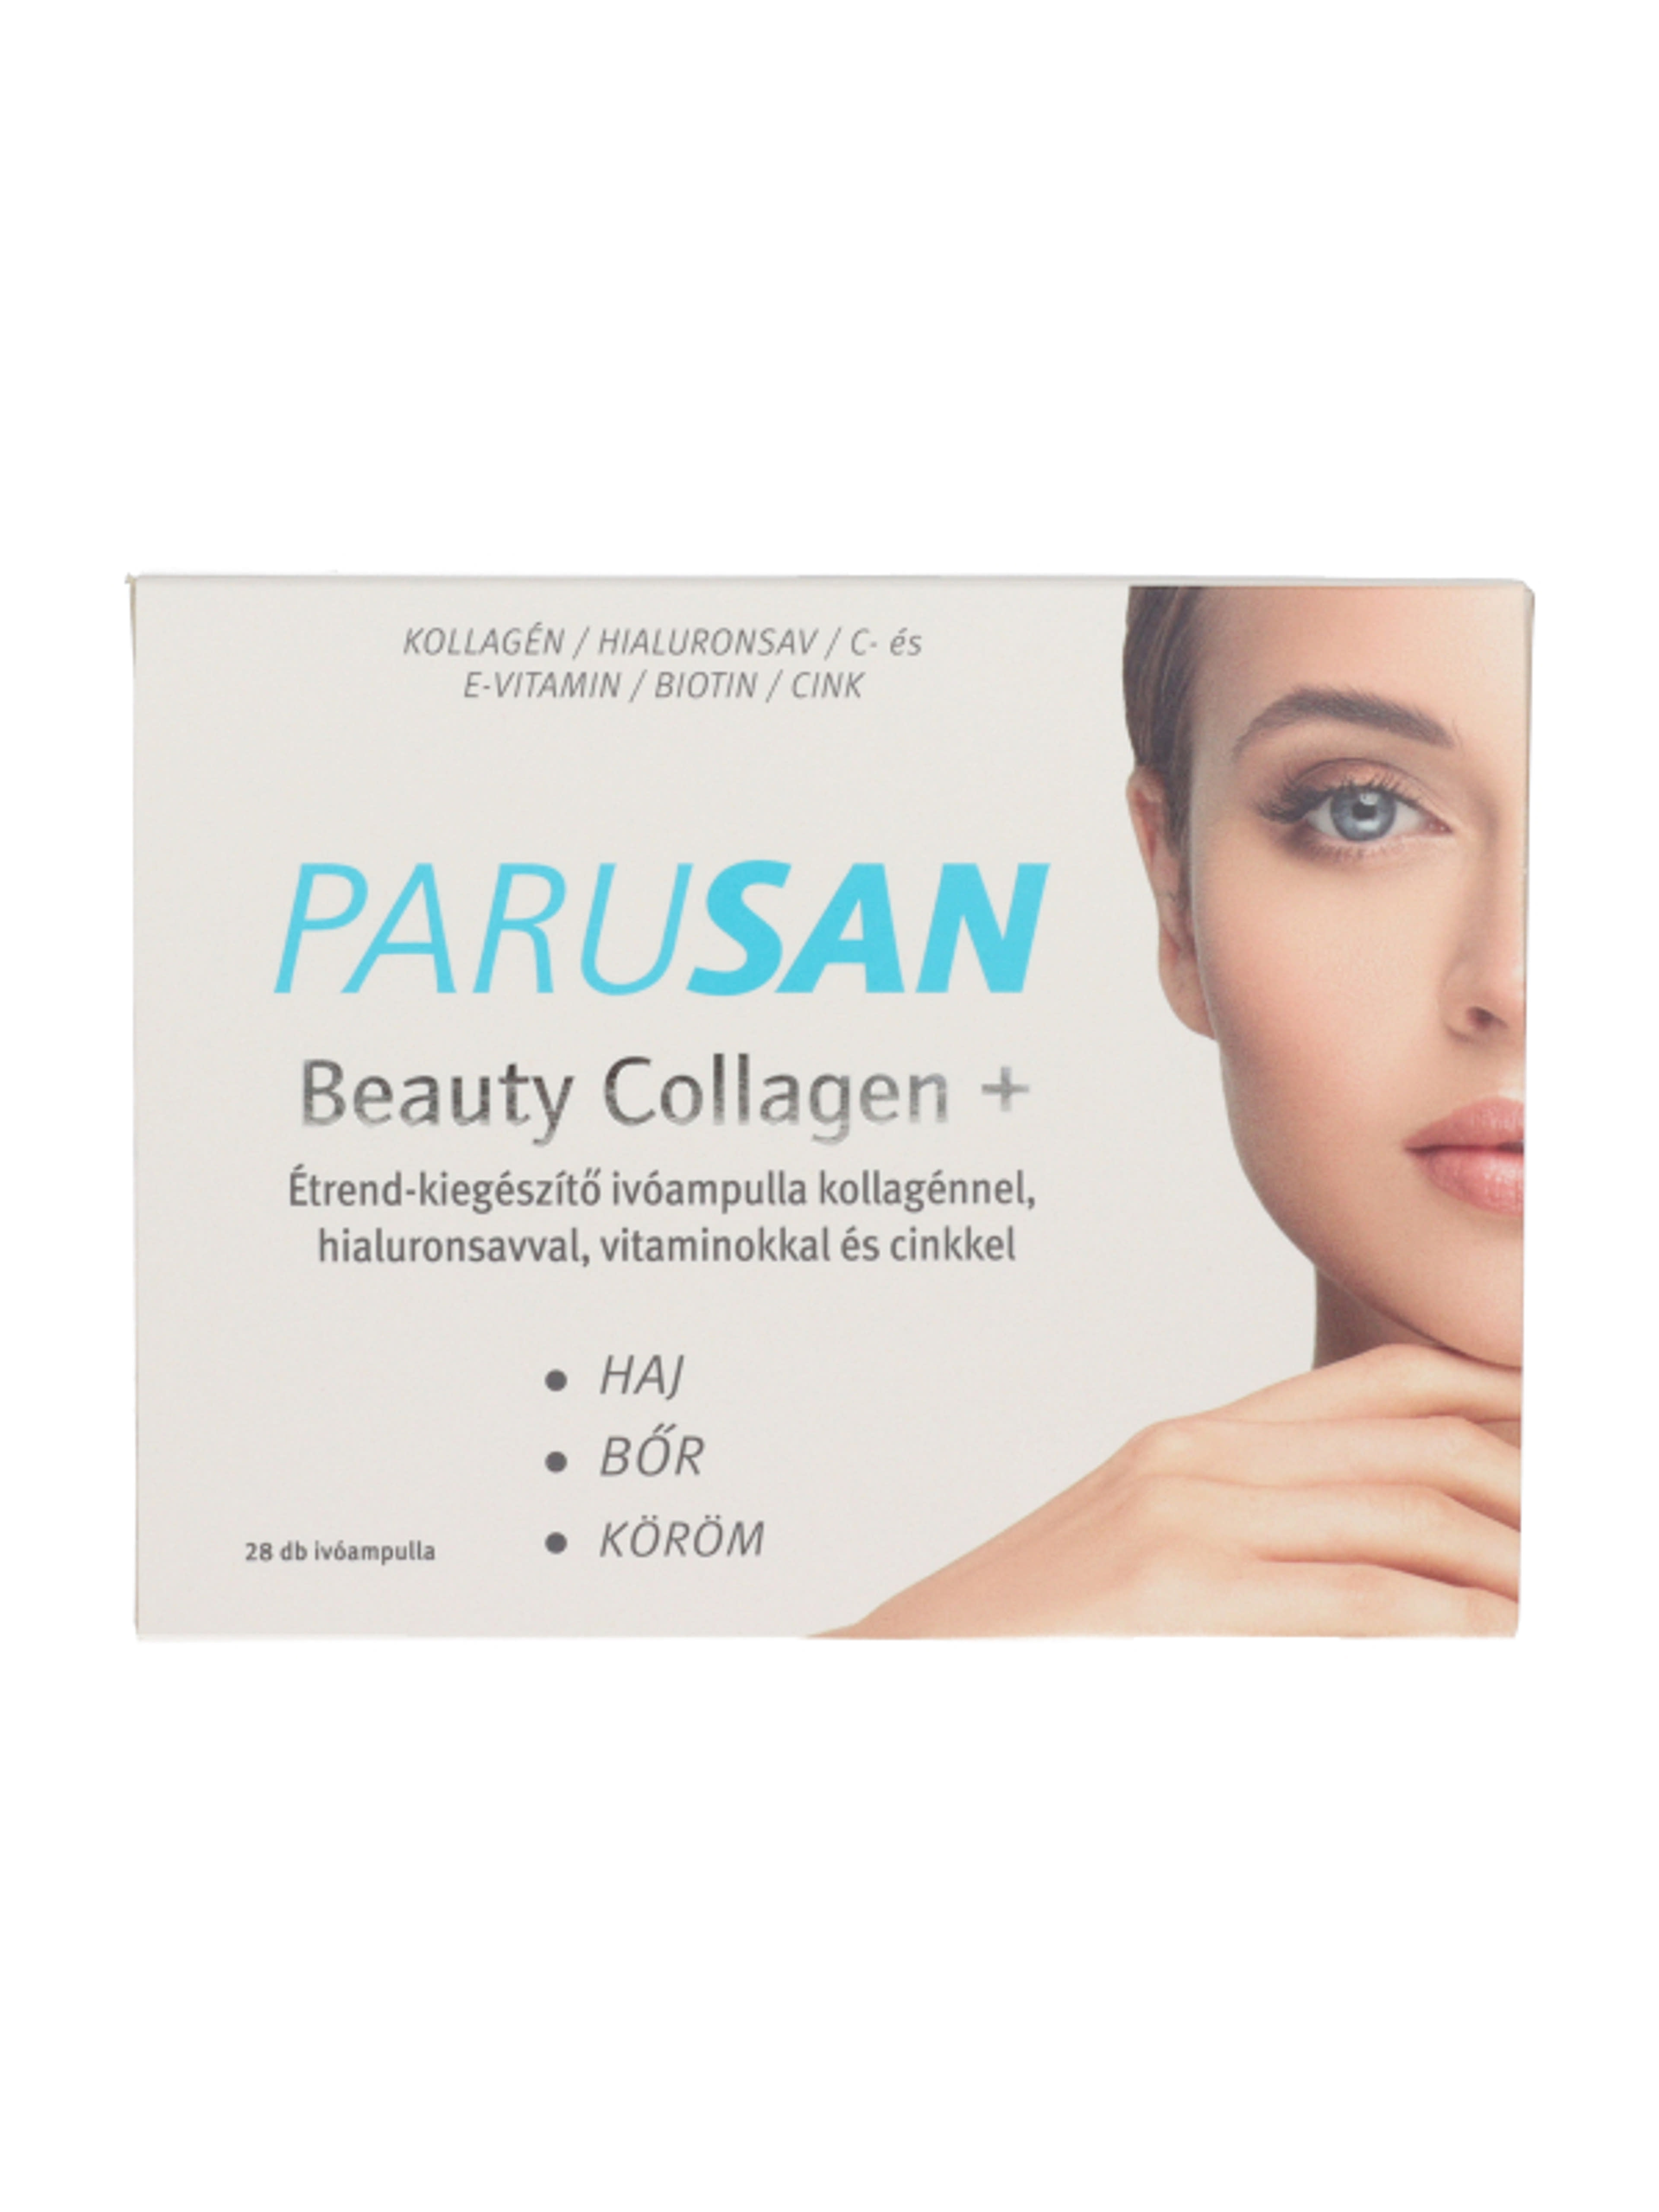 Parusan Beauty Collagen + kollagén és hialuronsav komplex - 28 db